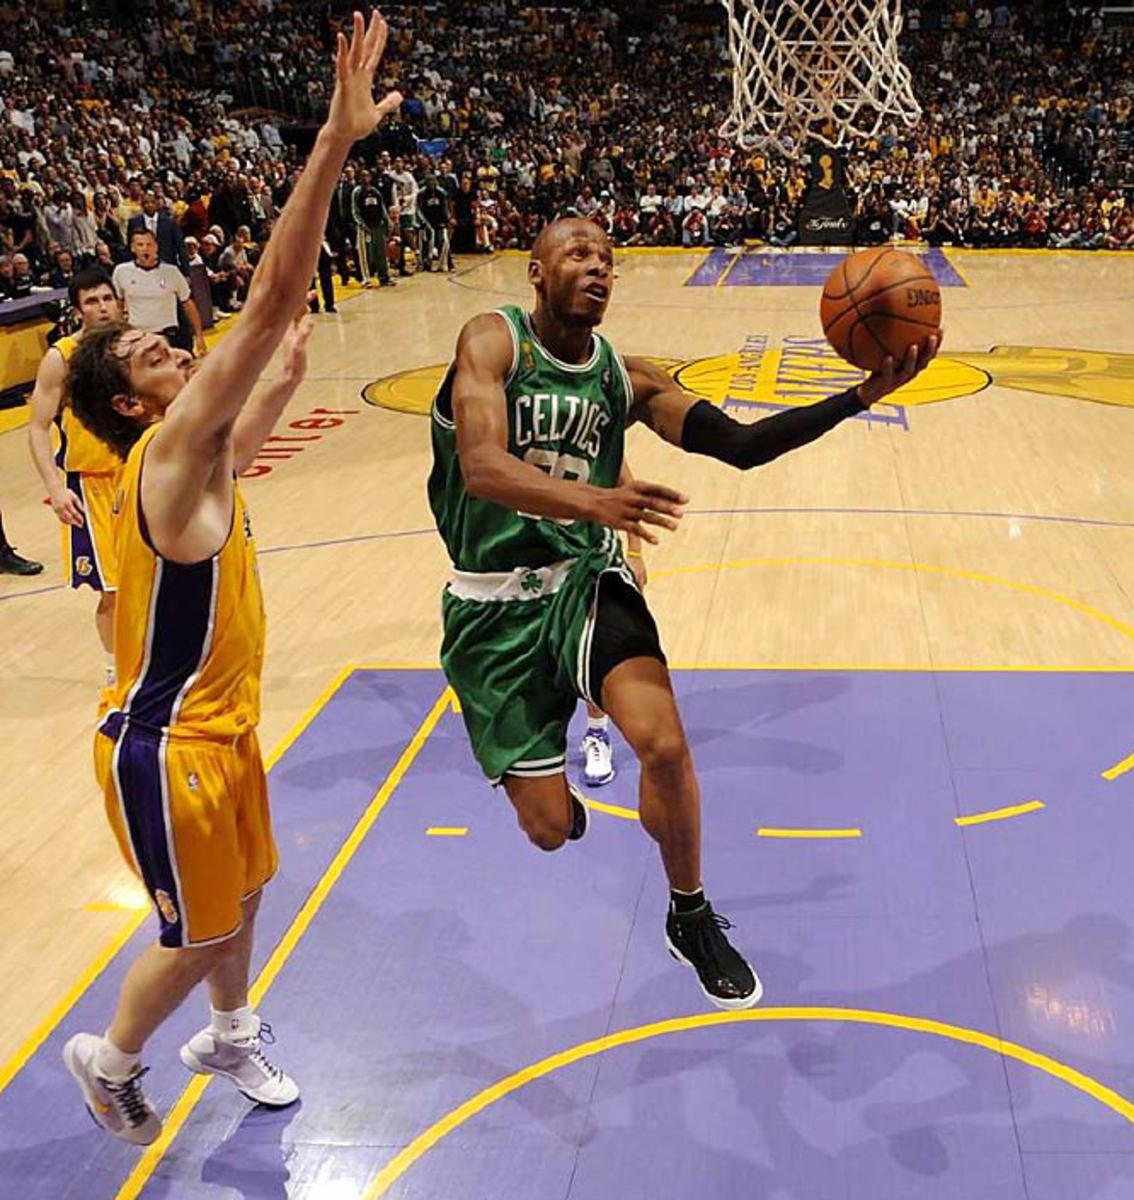 Celtics defeat Lakers